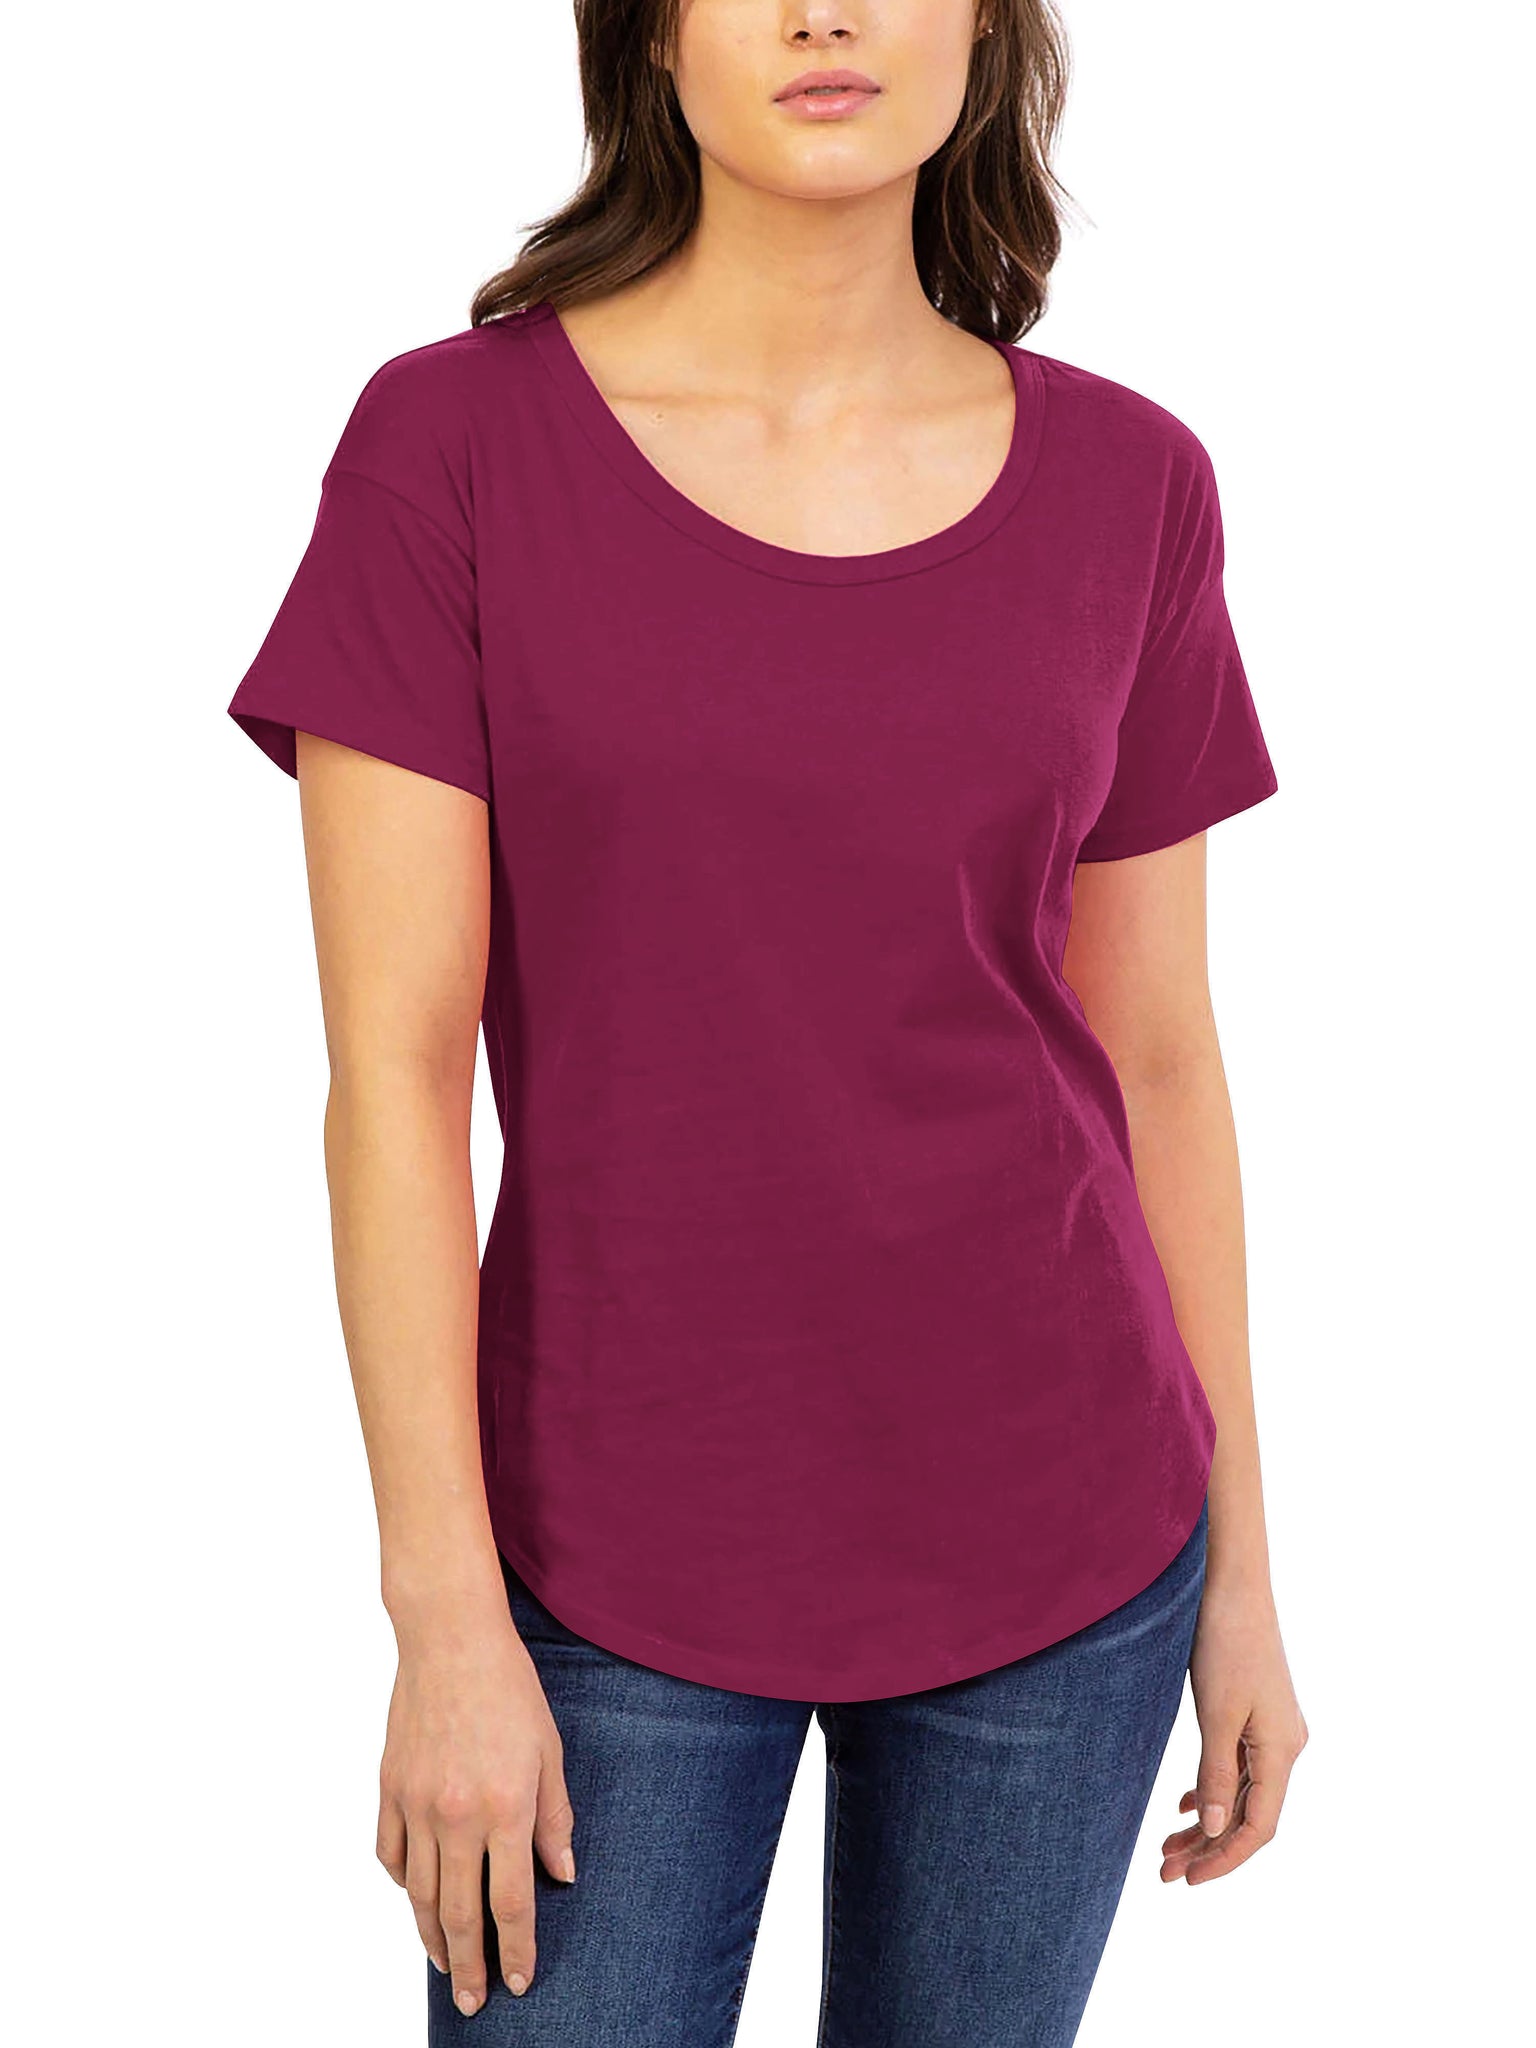 bellylady Women Cotton Short Sleeves T-shirt Round Neck Large